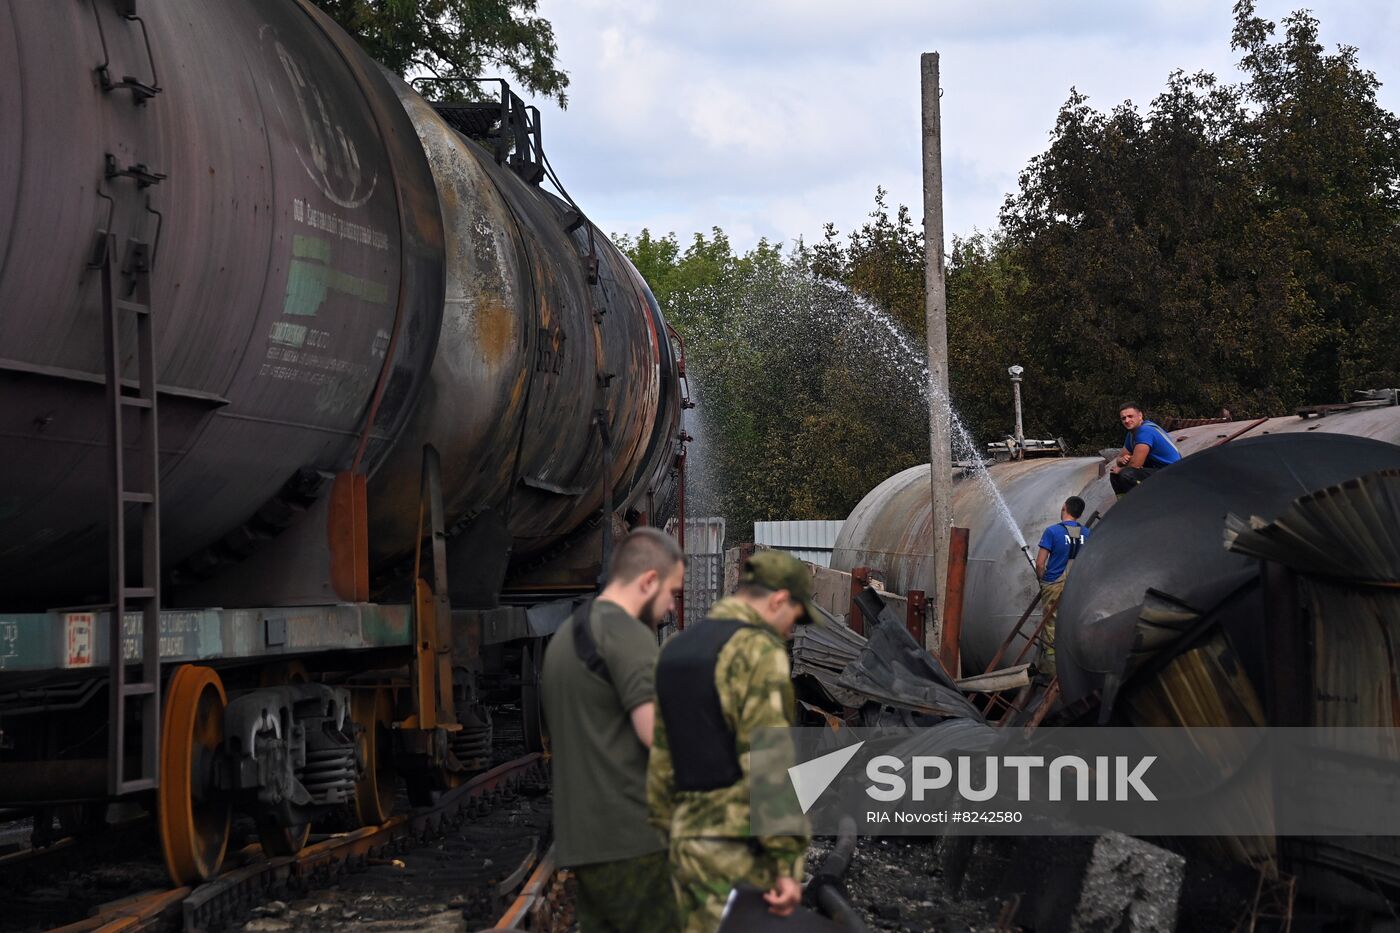 DPR Russia Ukraine Military Operation Fire